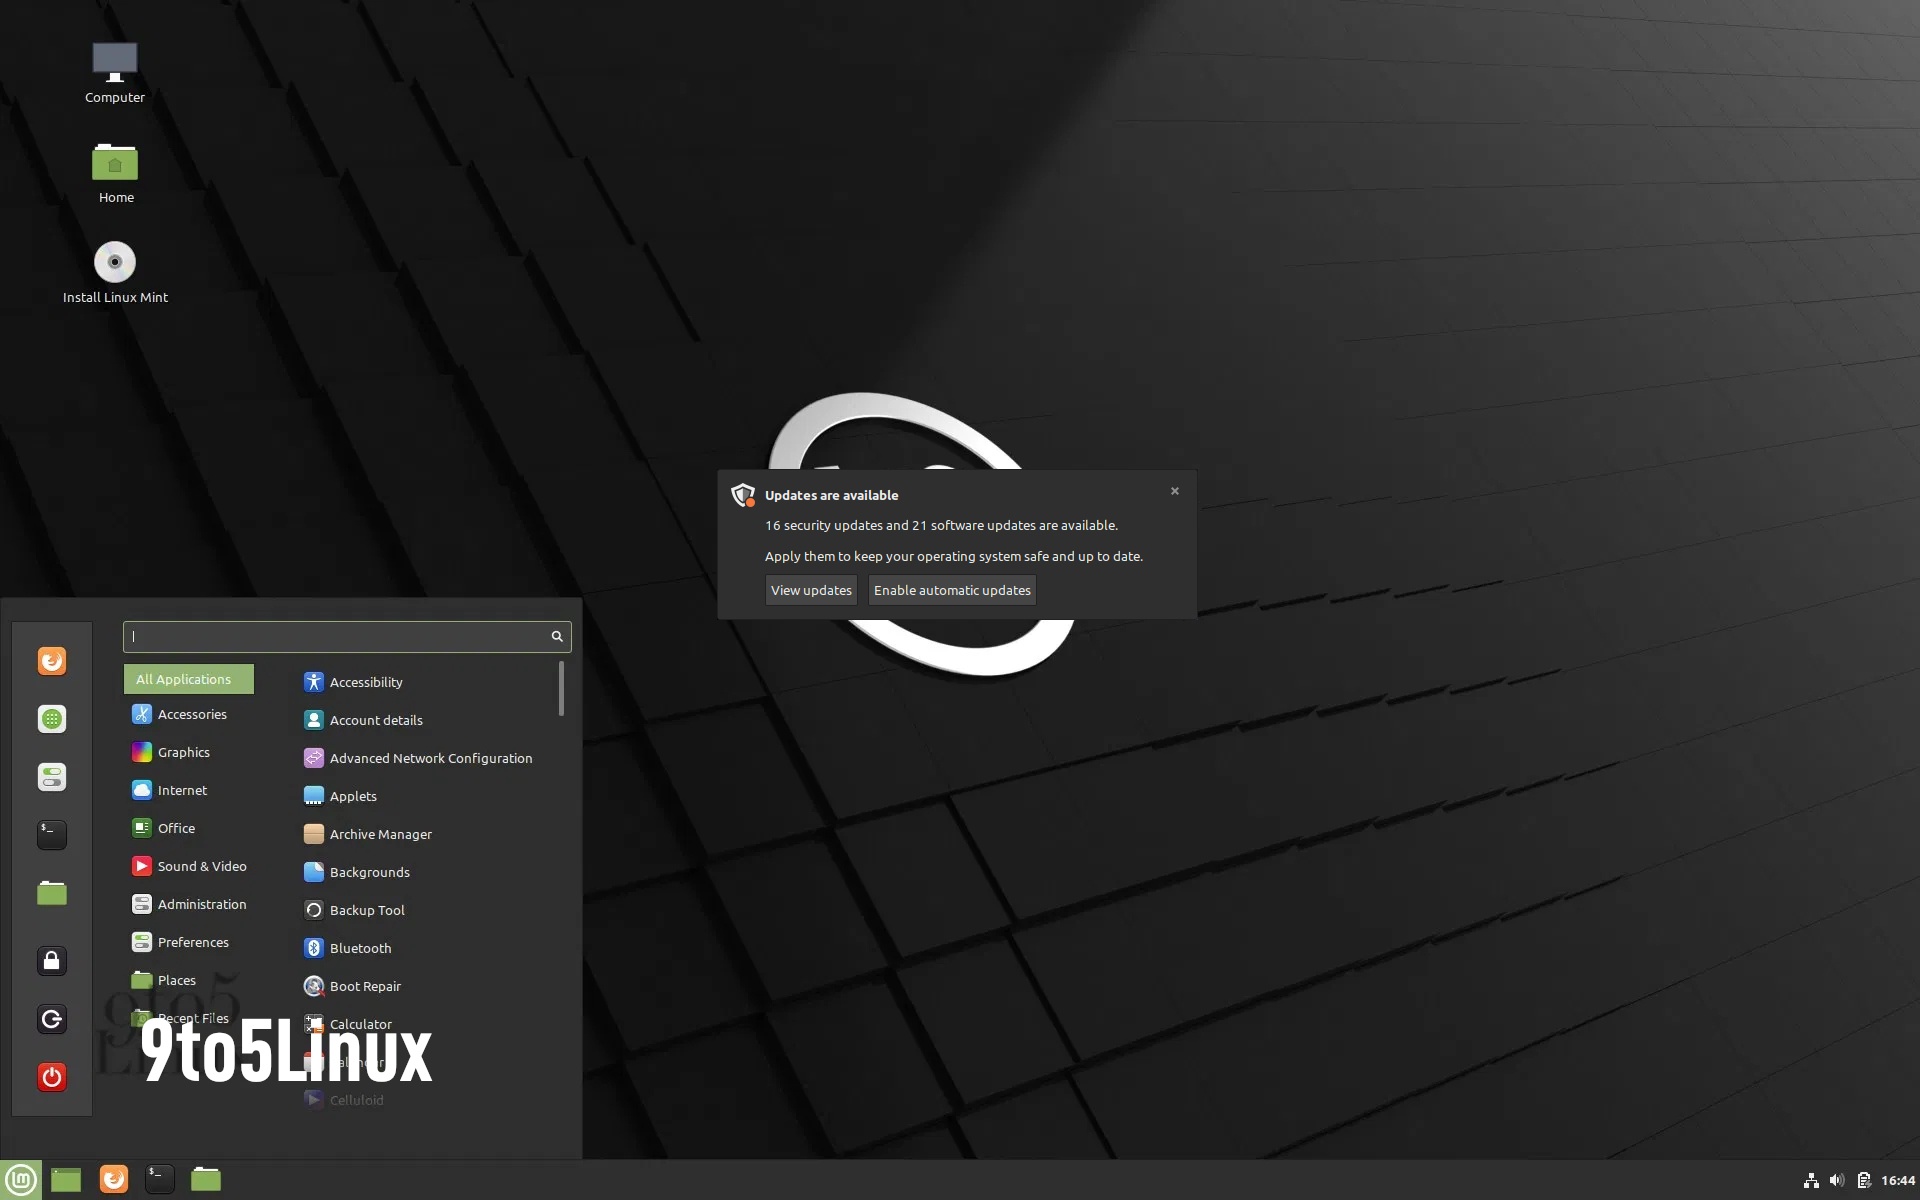 Linux Mint Devs Unveil New Notification System for Updates